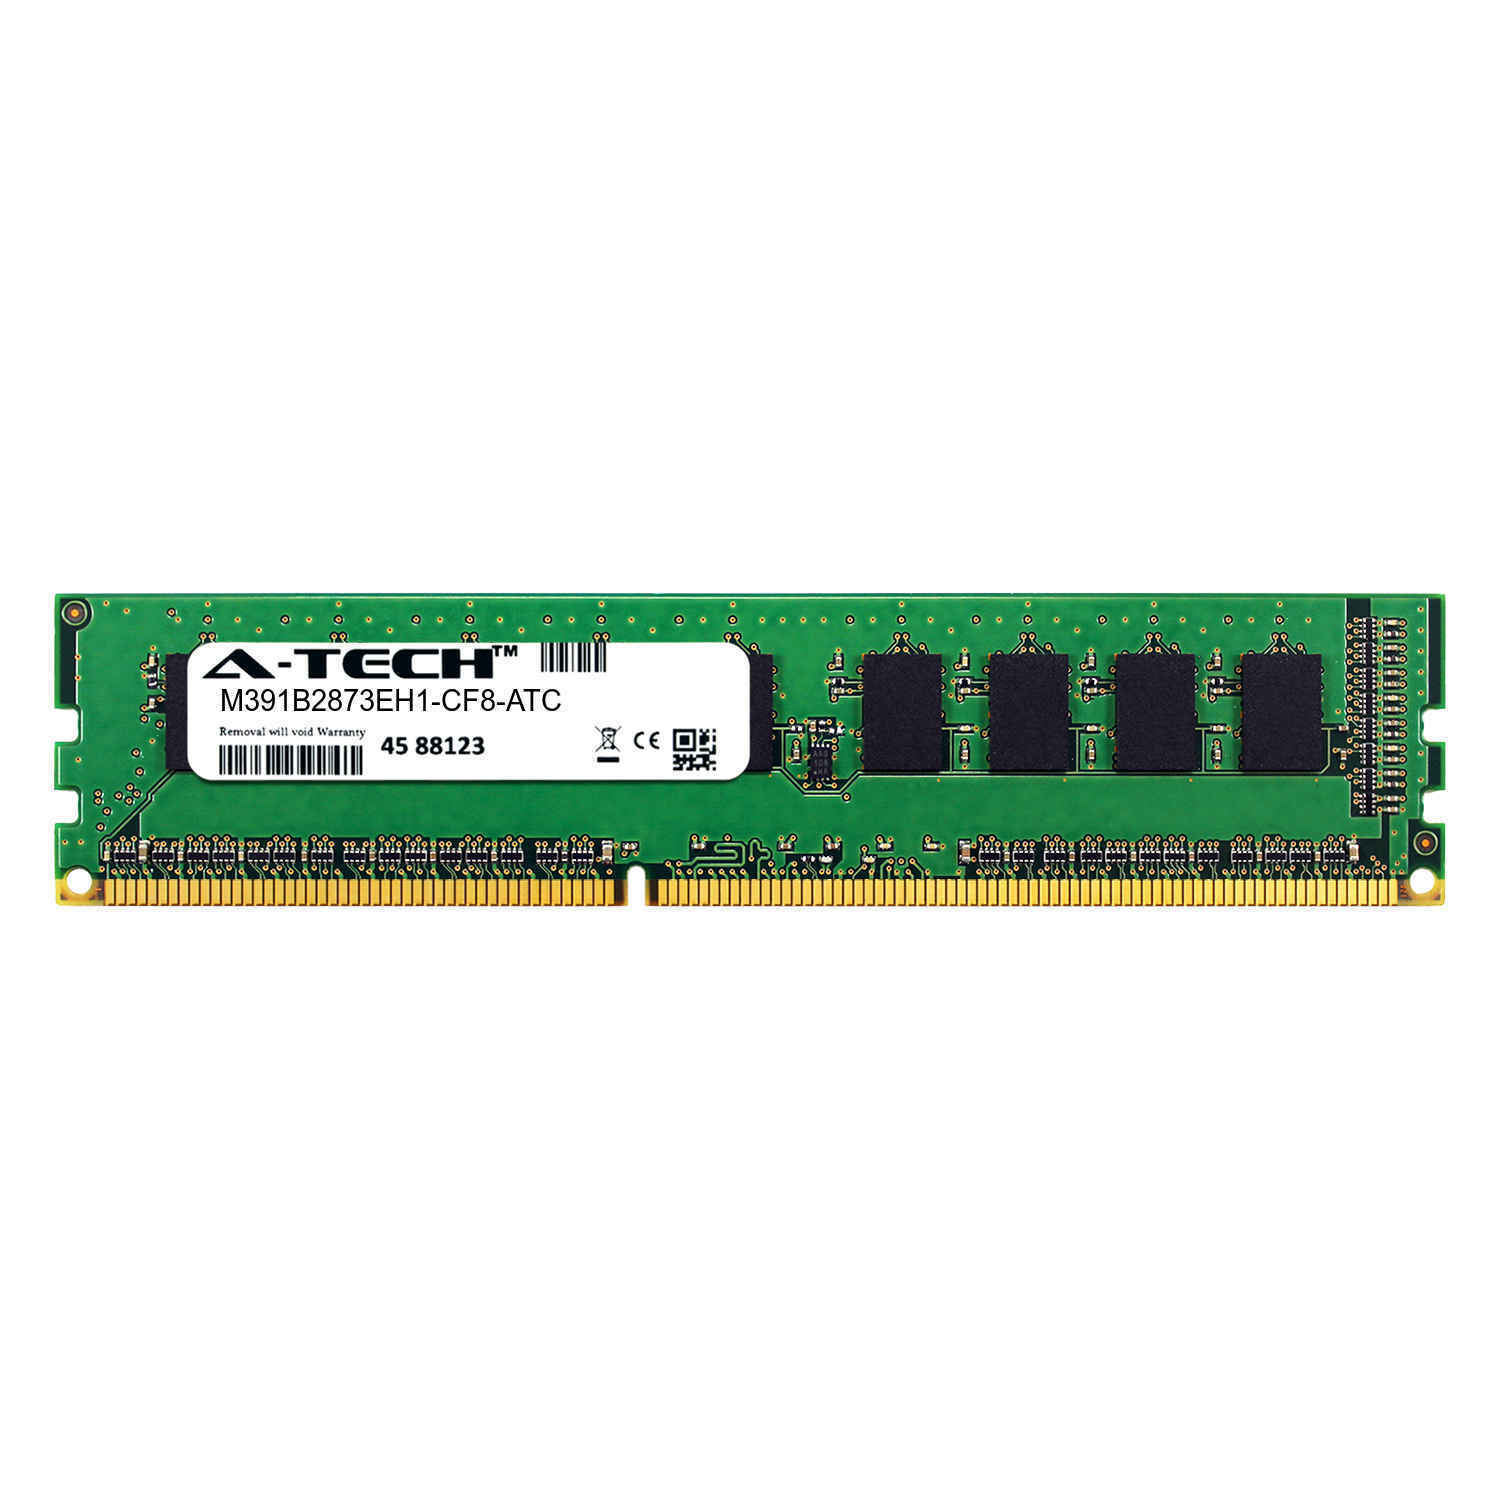 1GB PC3-8500E ECC UDIMM (Samsung M391B2873EH1-CF8 Equivalent) Server Memory RAM